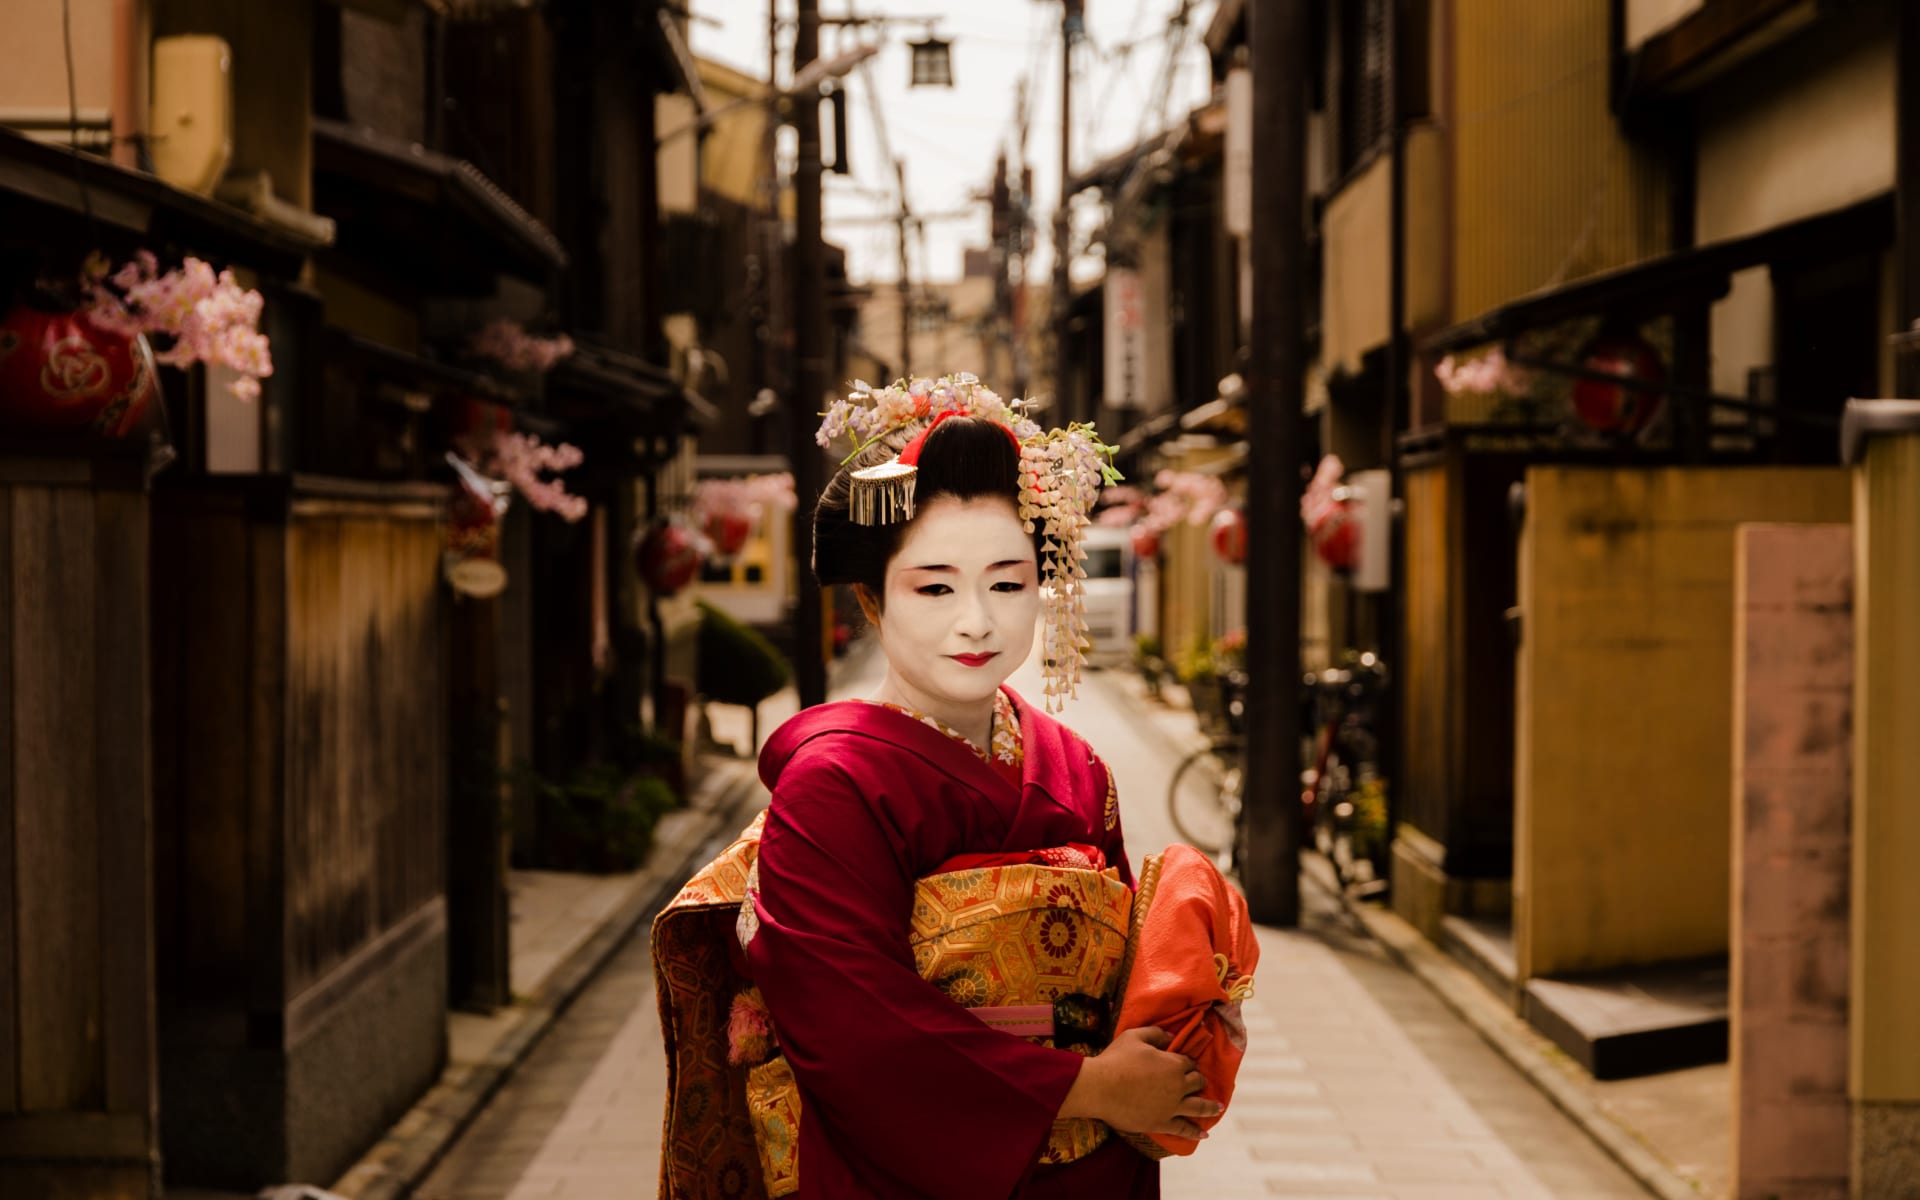 Food & Art: A Cultural Tour of Japan